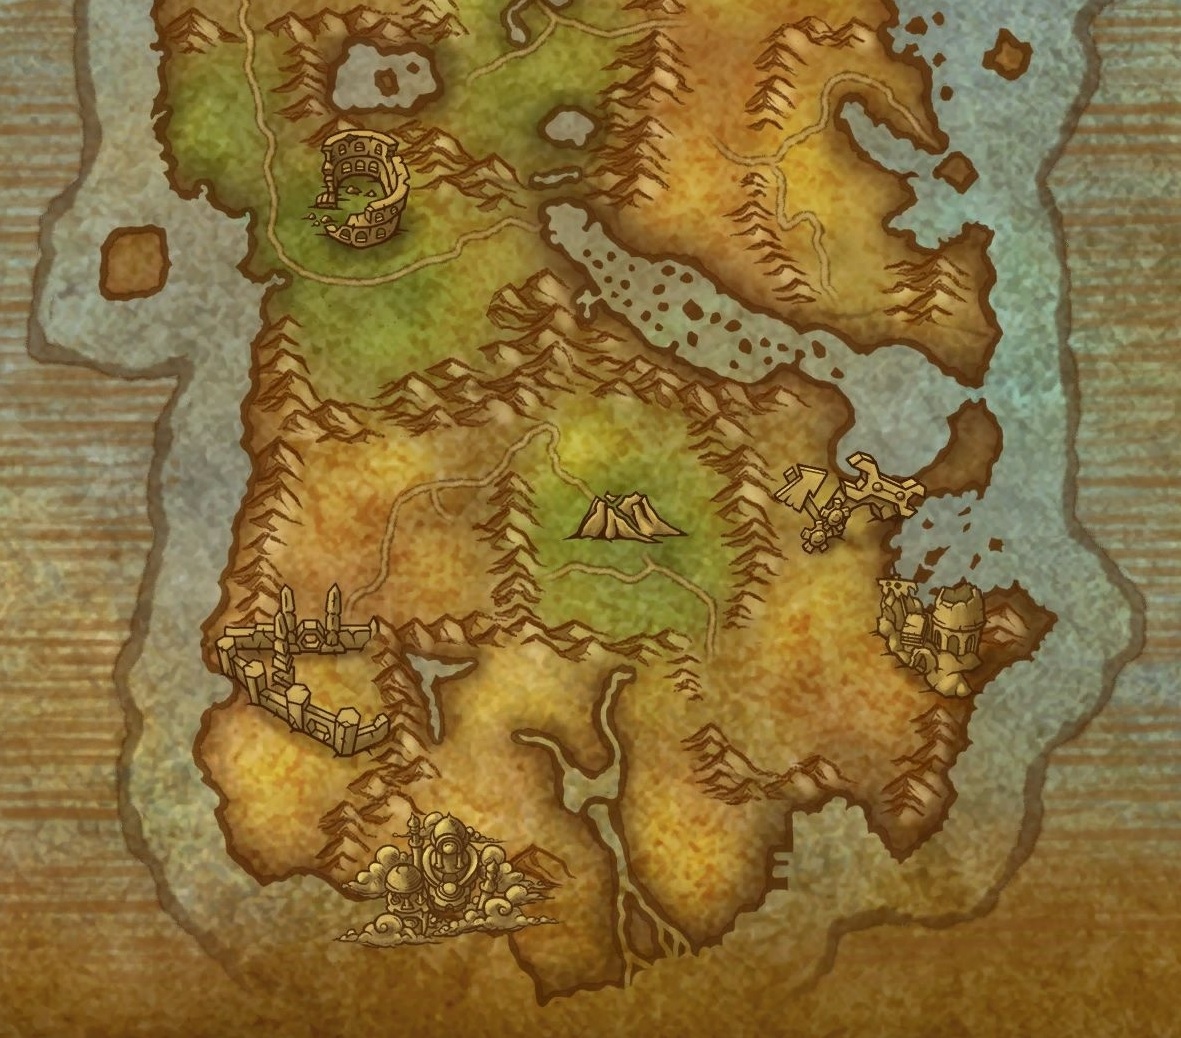 kalimdor map cataclysm